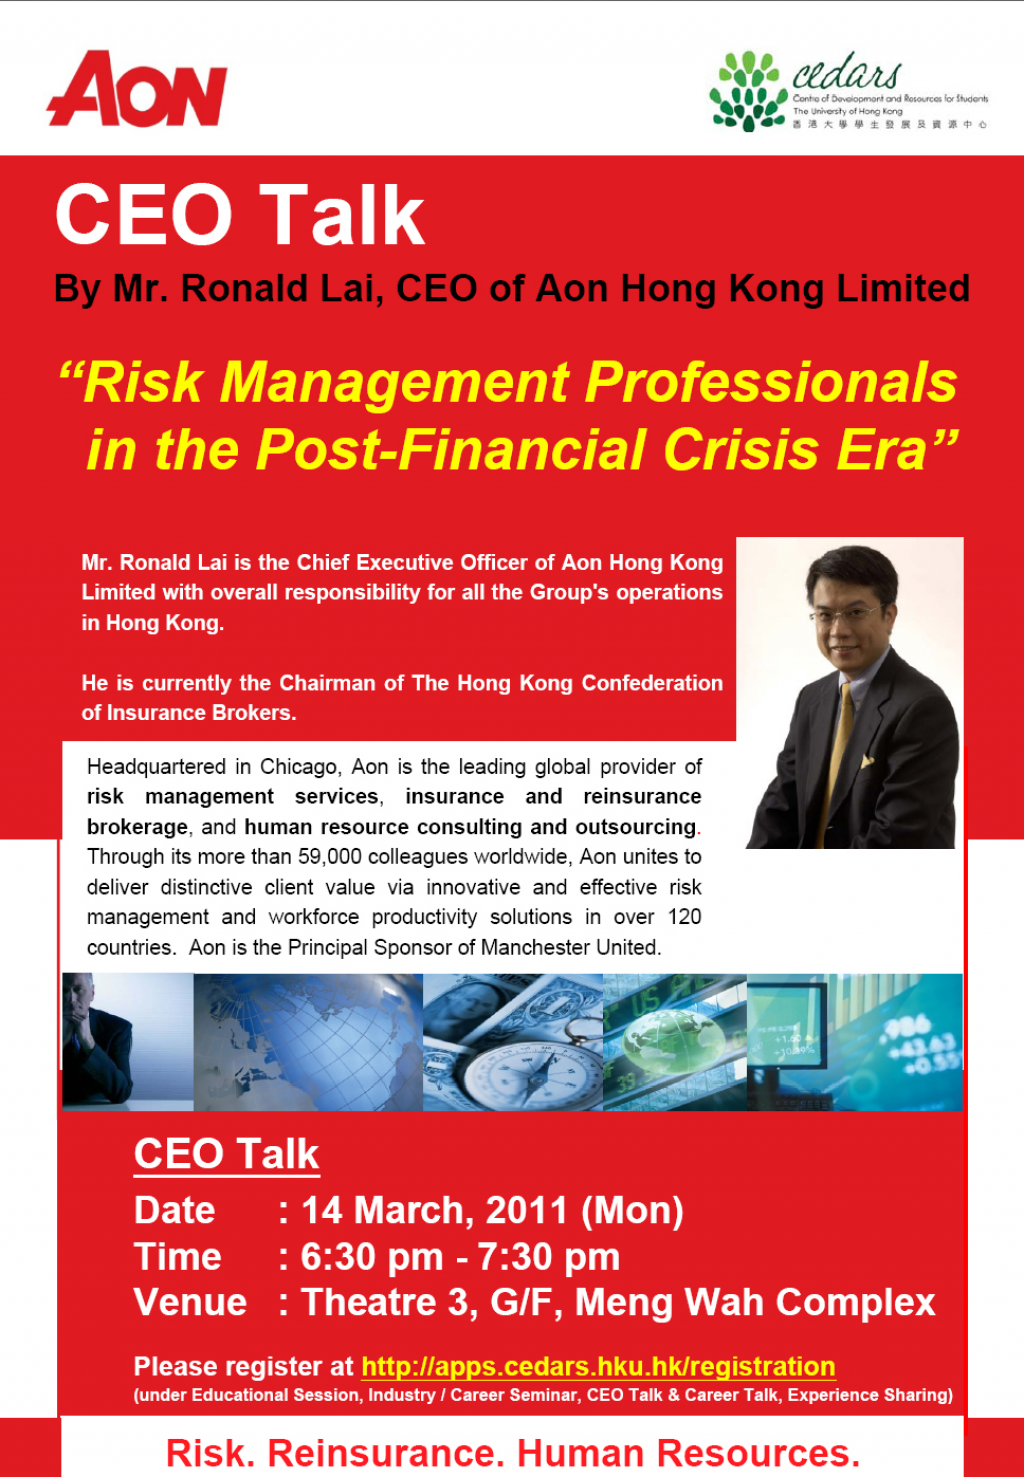 Aon Hong Kong Limited - CEO Talk on 14 March